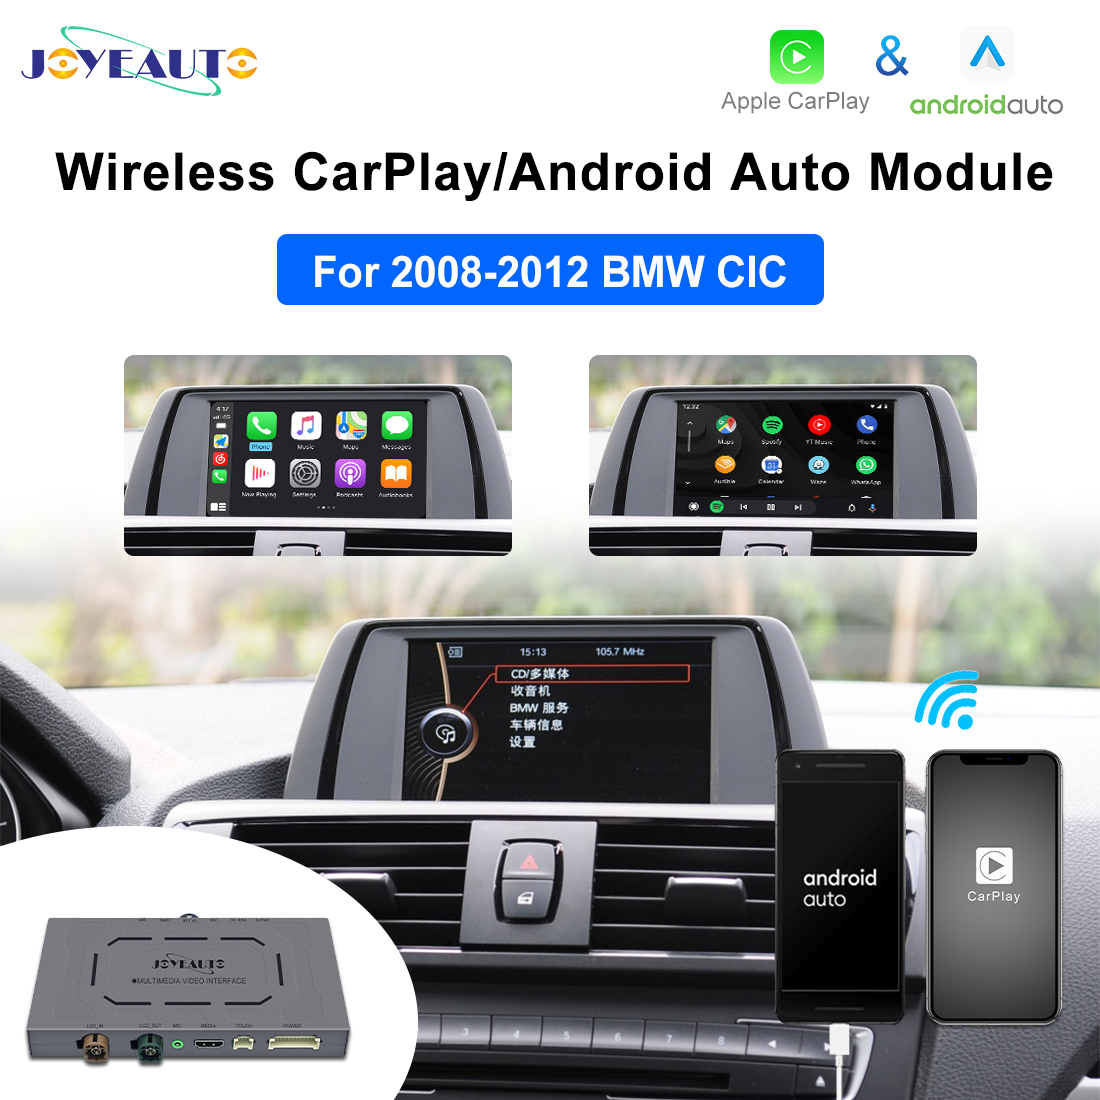 BMW 3 Series F30 2013-2017 NBT WiFi Wireless Apple CarPlay Interface  Retrofit - Joyeauto Technology